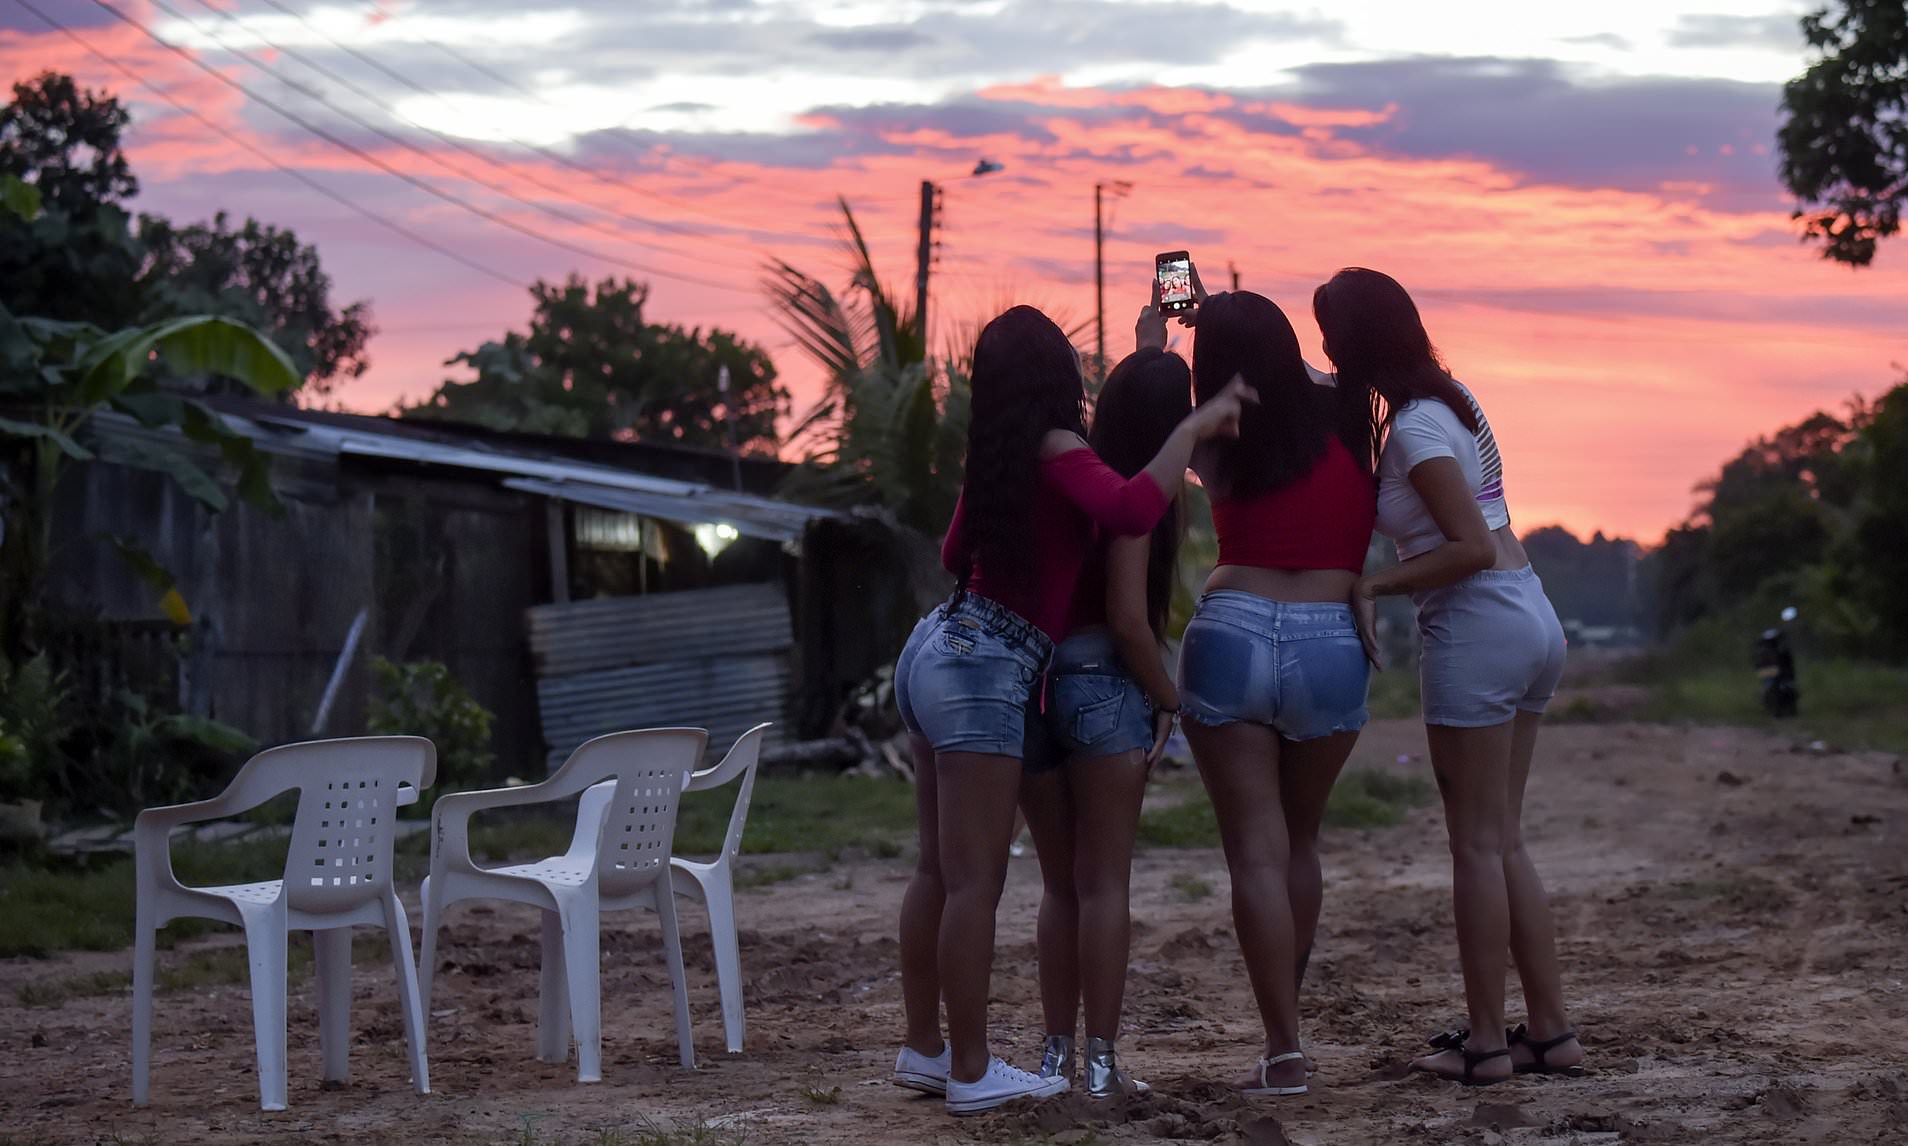  Girls in Venezuela, Cuba